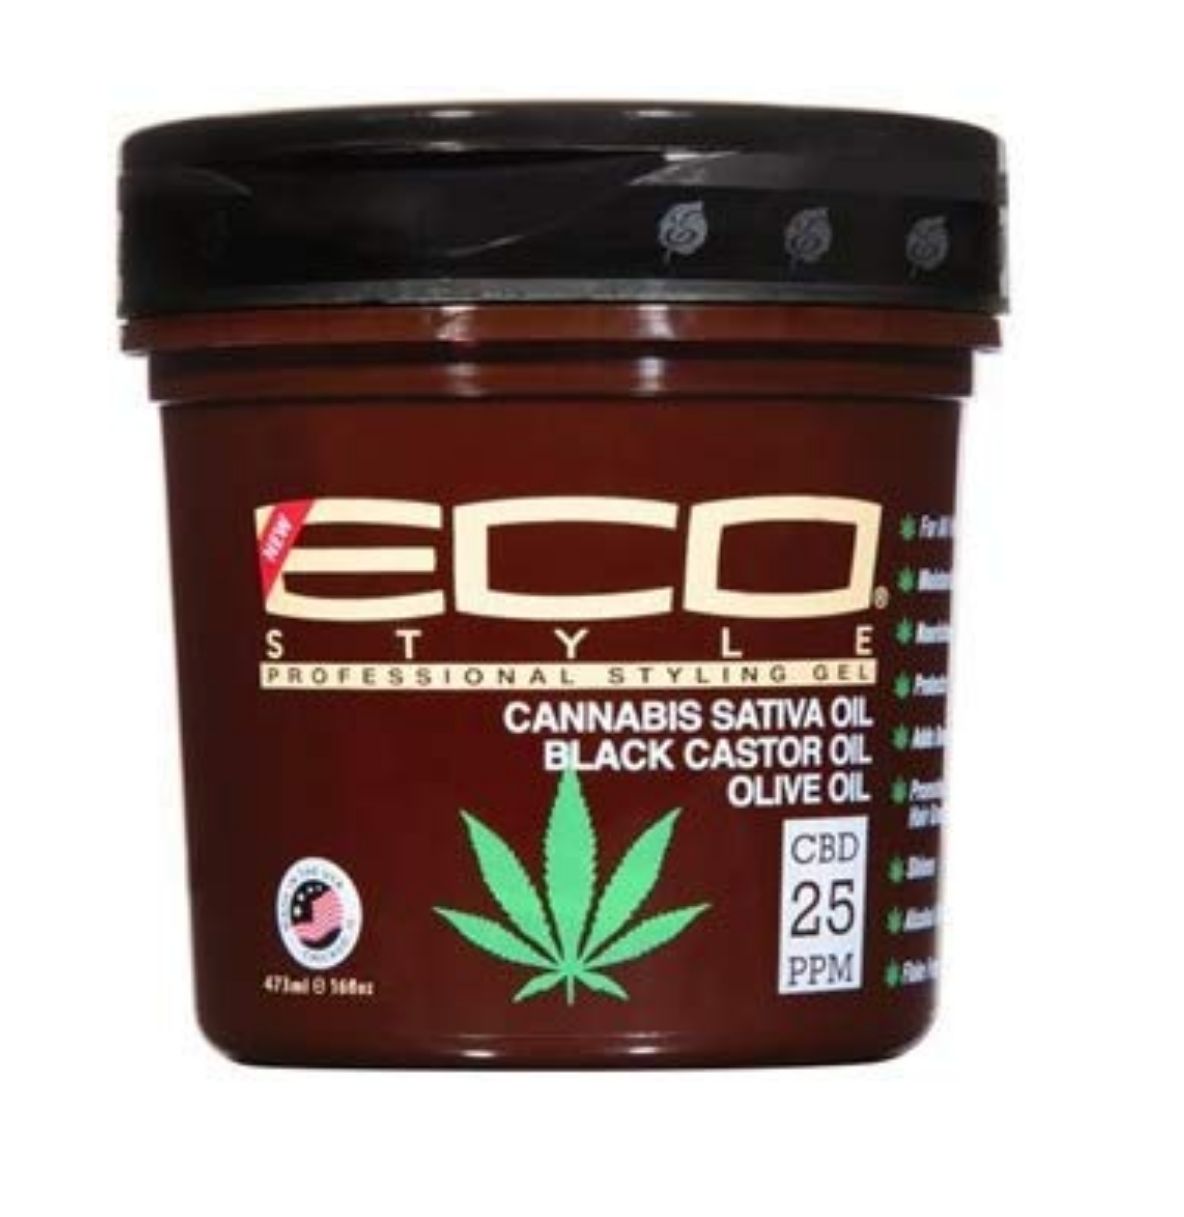 *BEST LOVED* Eco Styler Cannabis Sativa Oil Gel.